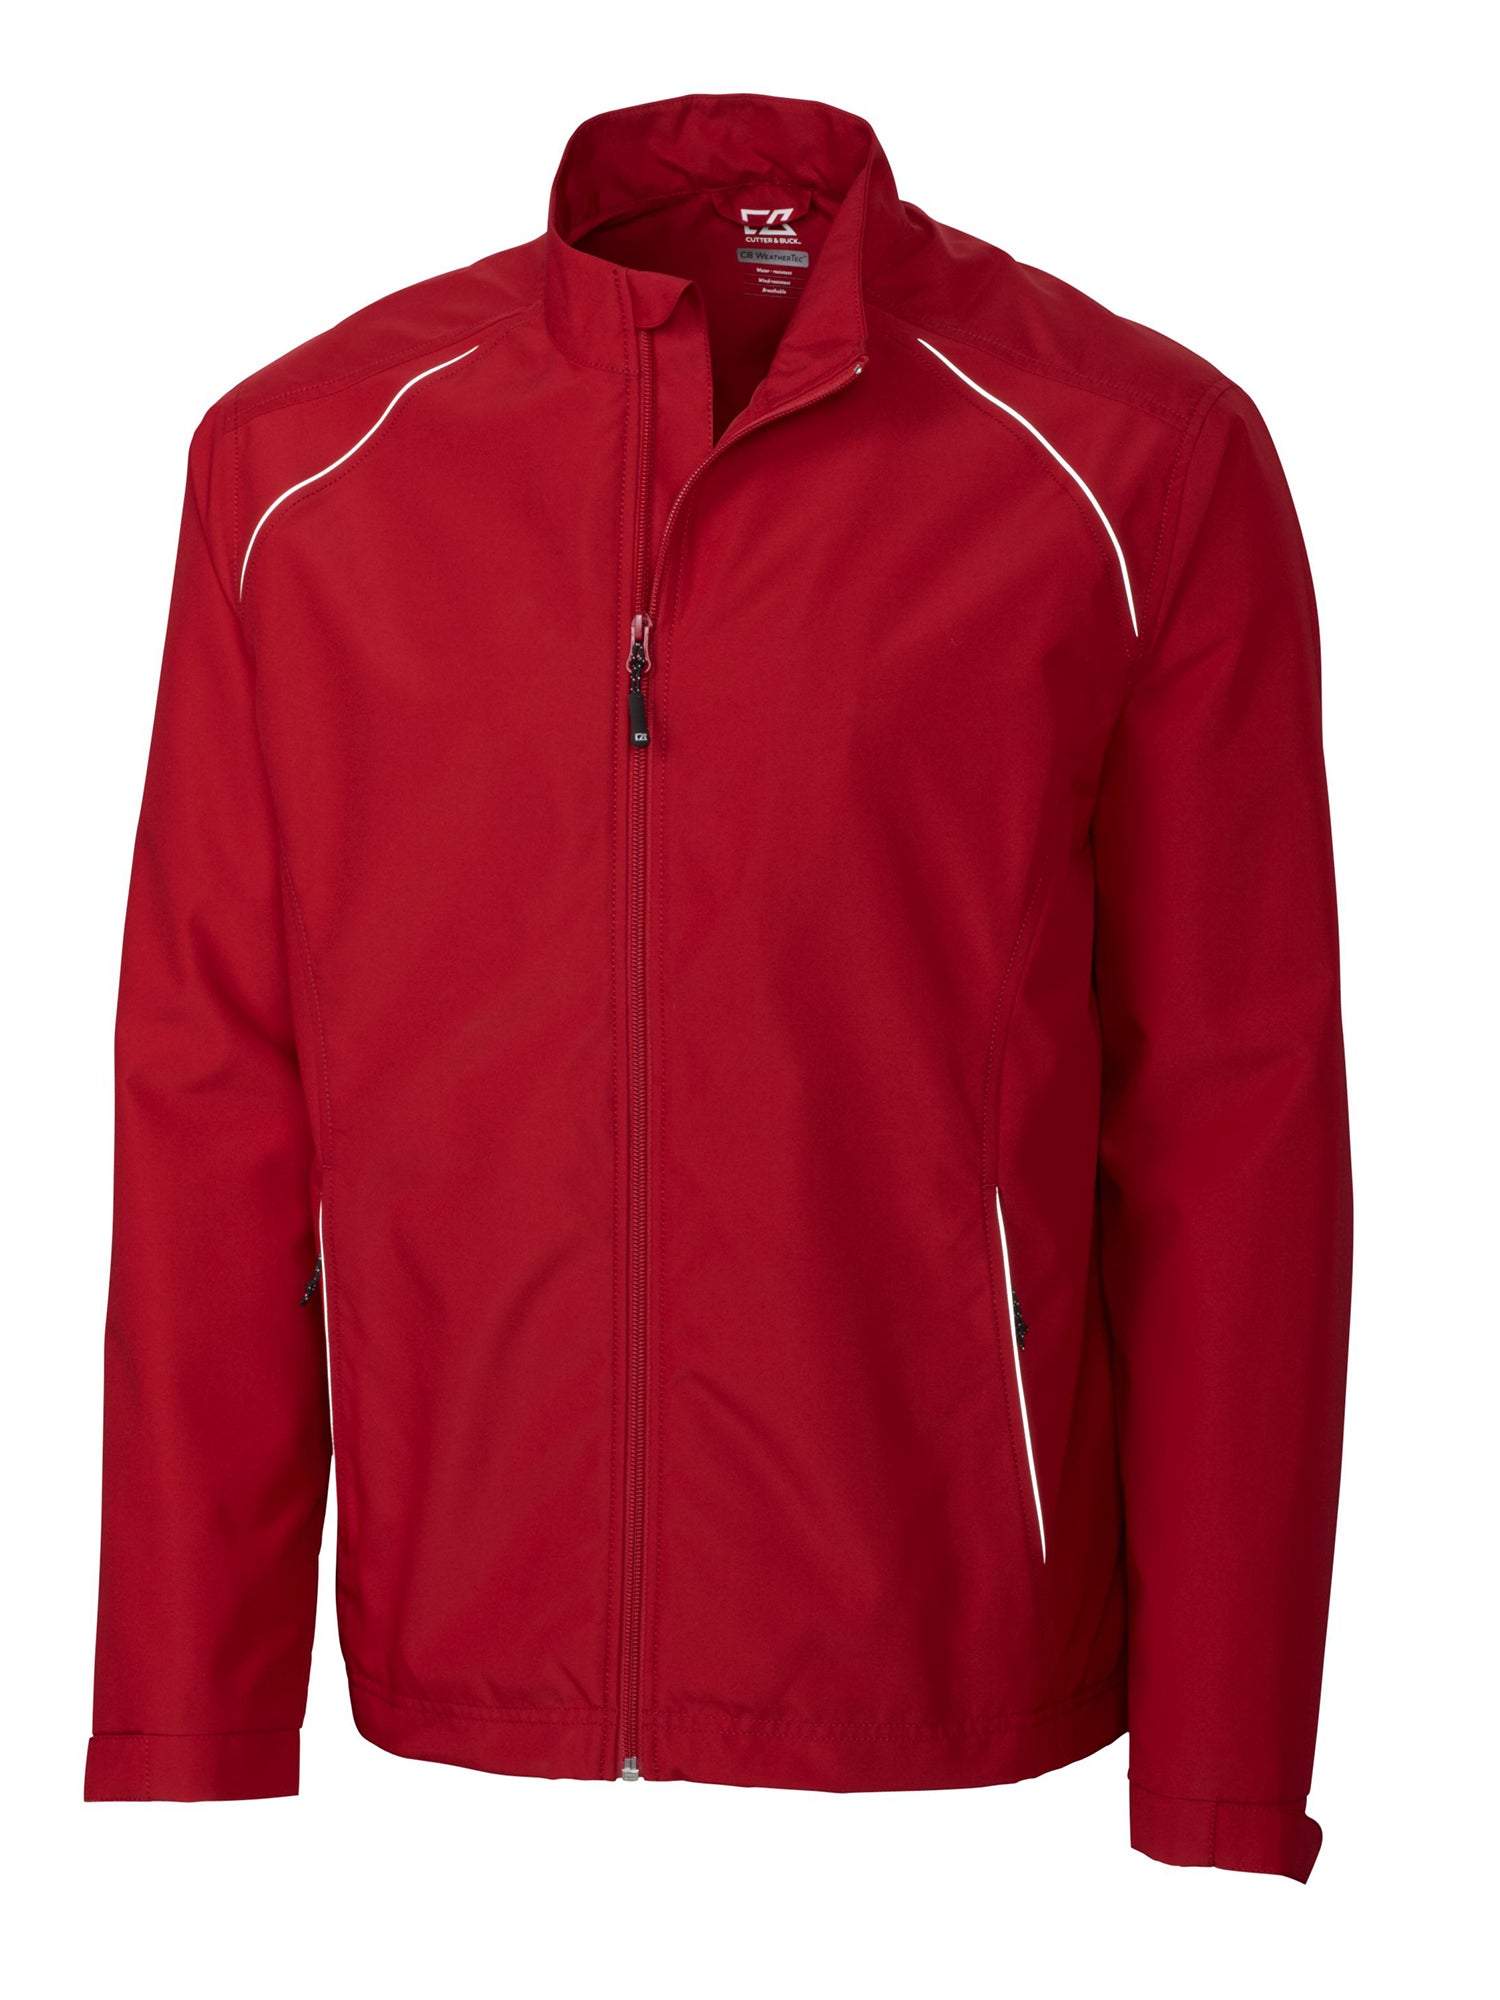 Cutter & Buck Beacon Full Zip Jacket in Cardinal Red